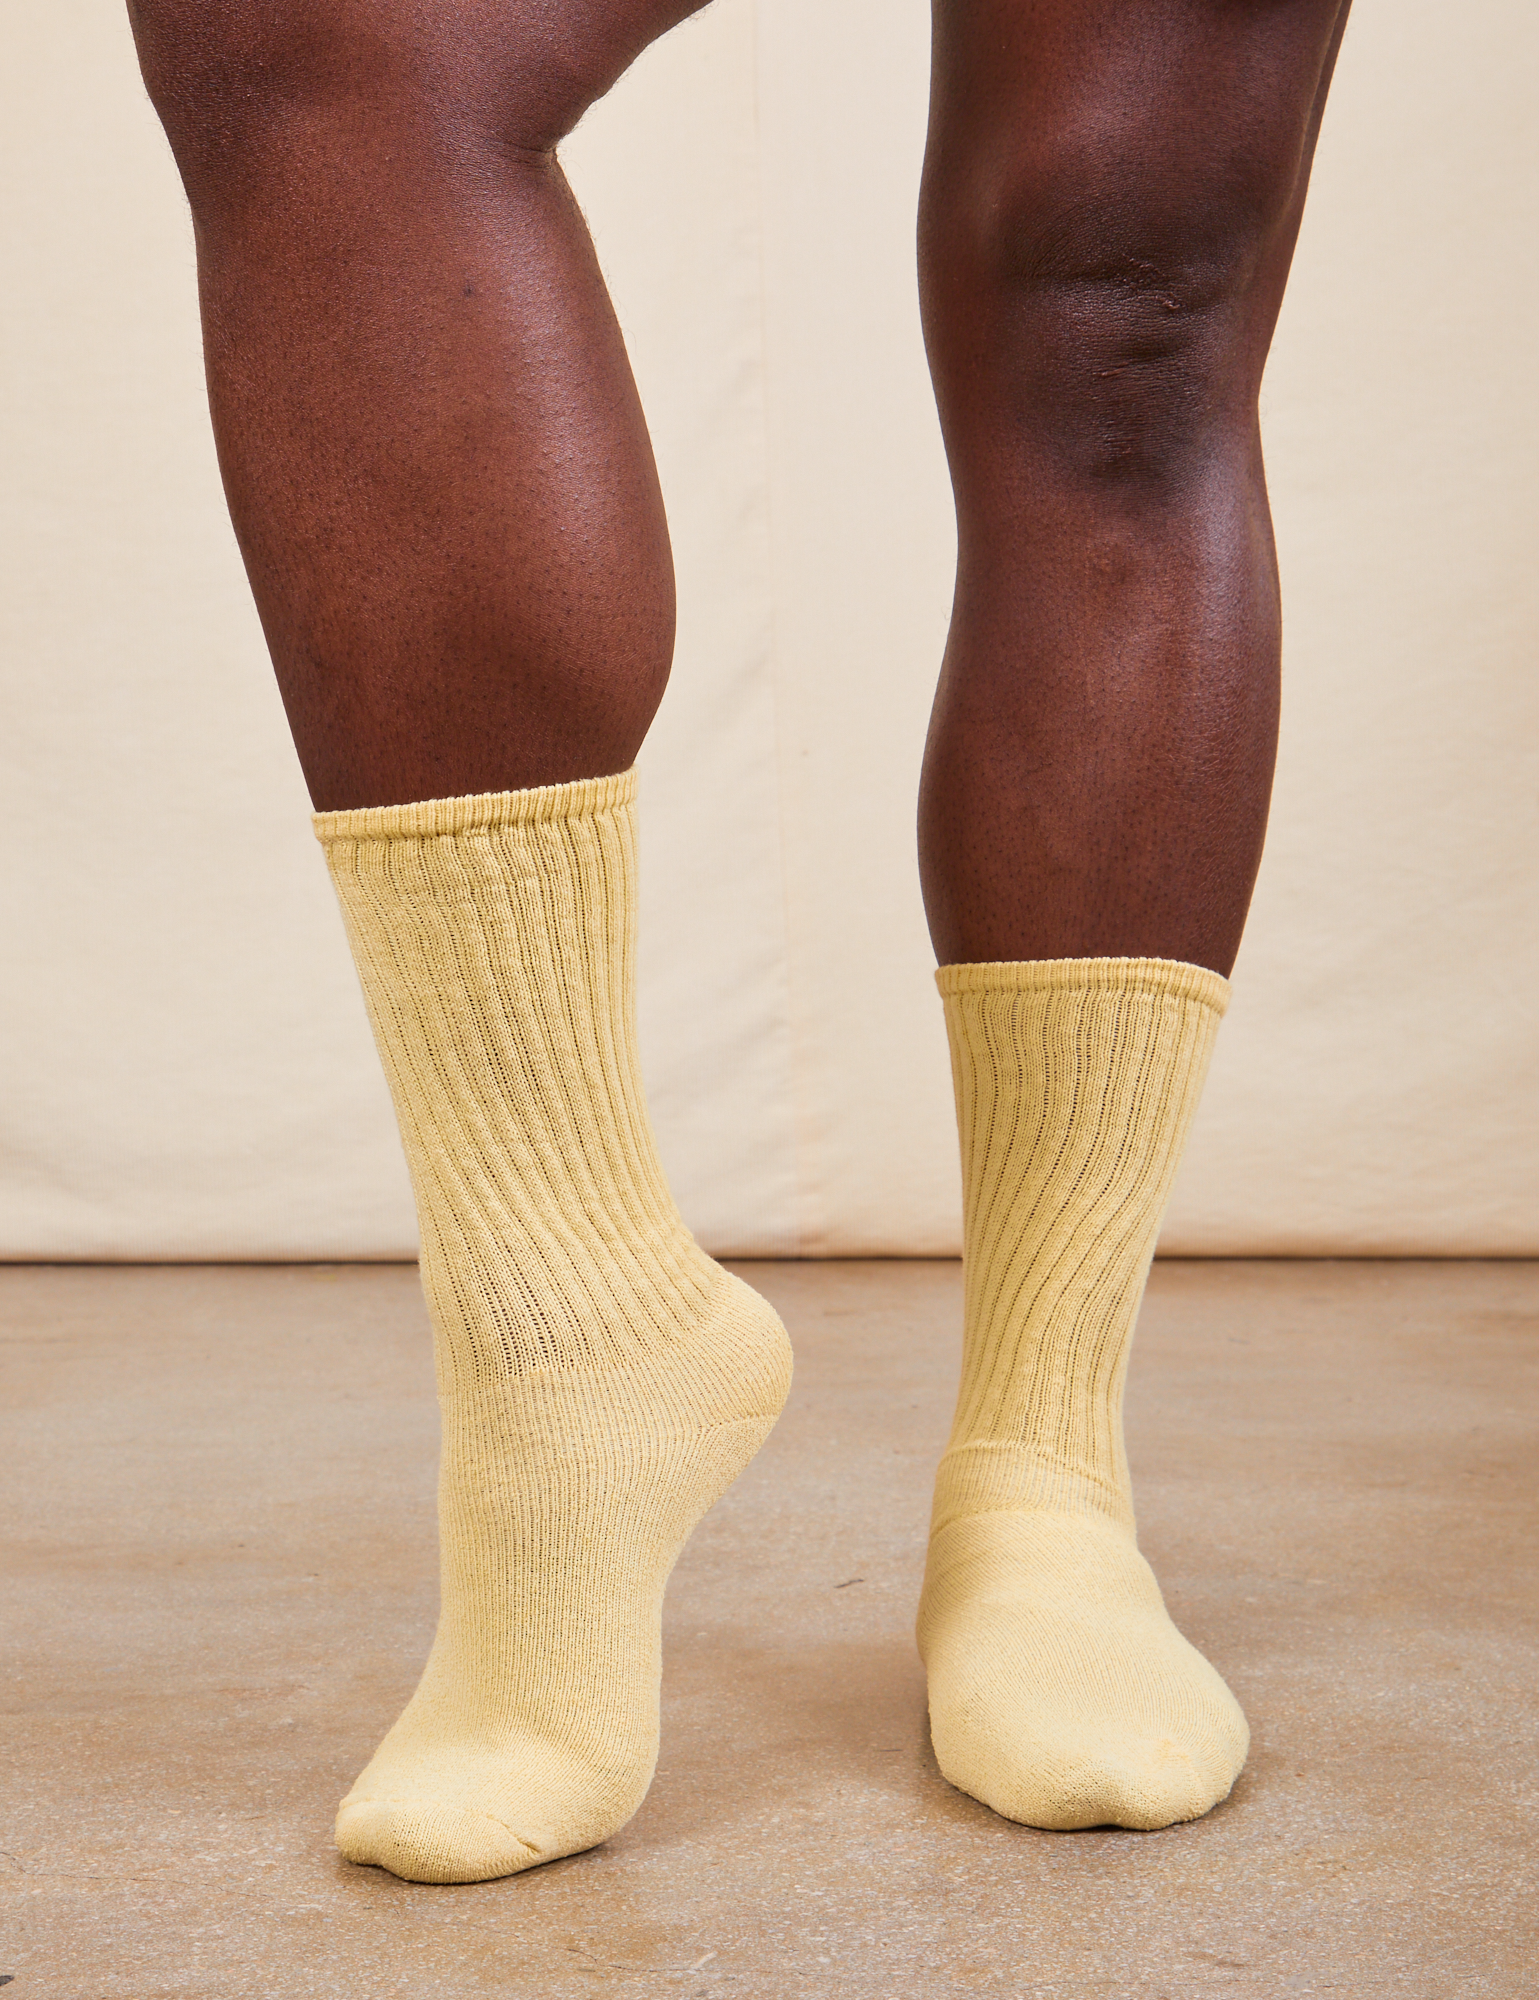 Men's Yellow Socks